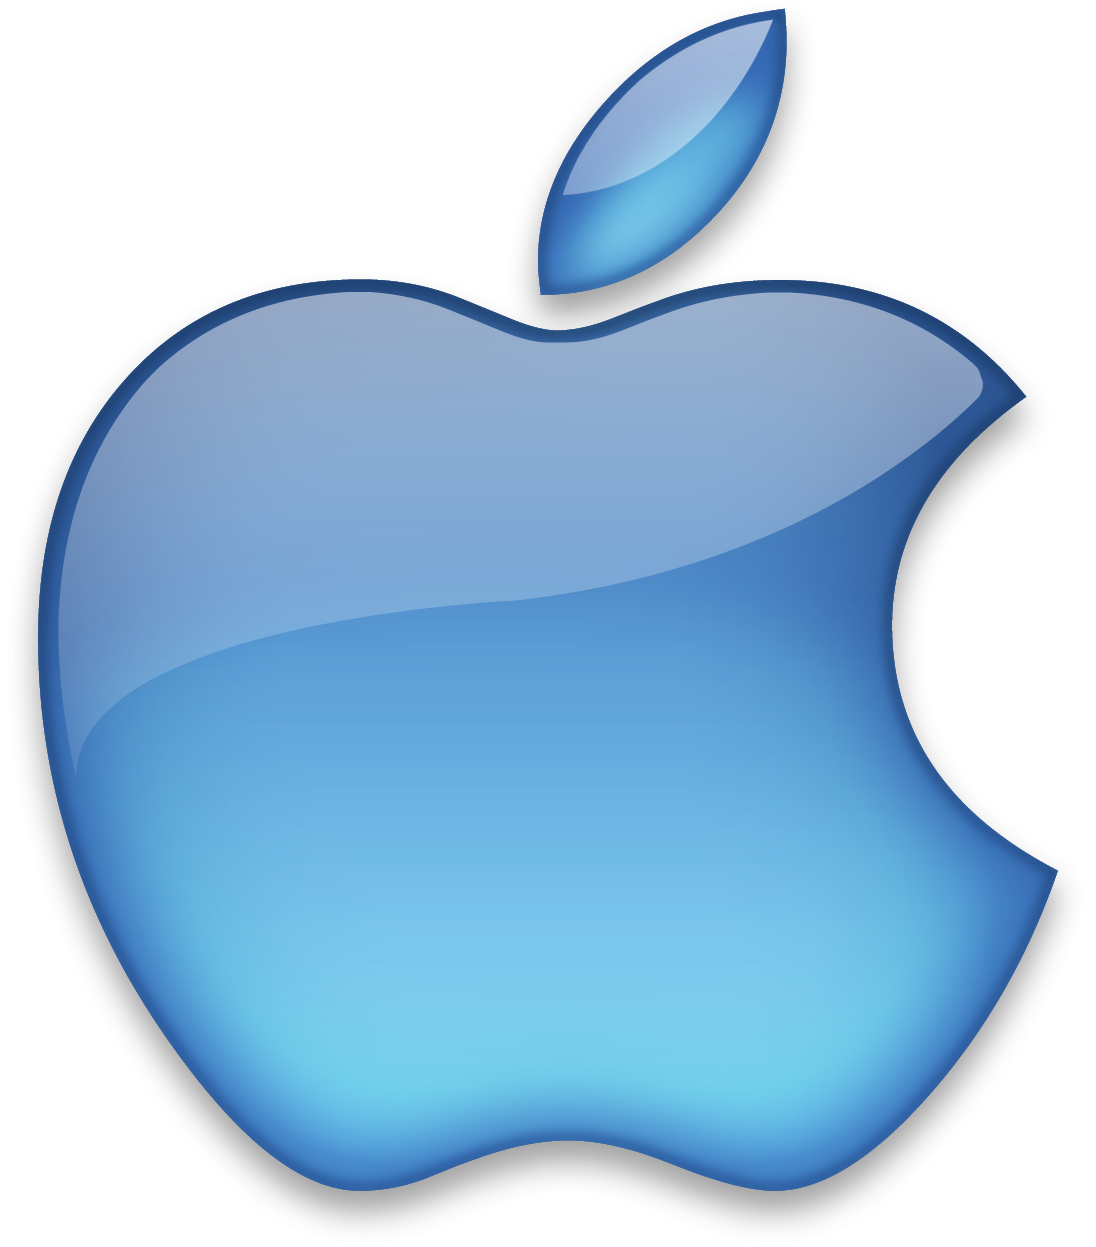 Crystal Logo Mac Computer Symbol Png Free Download.